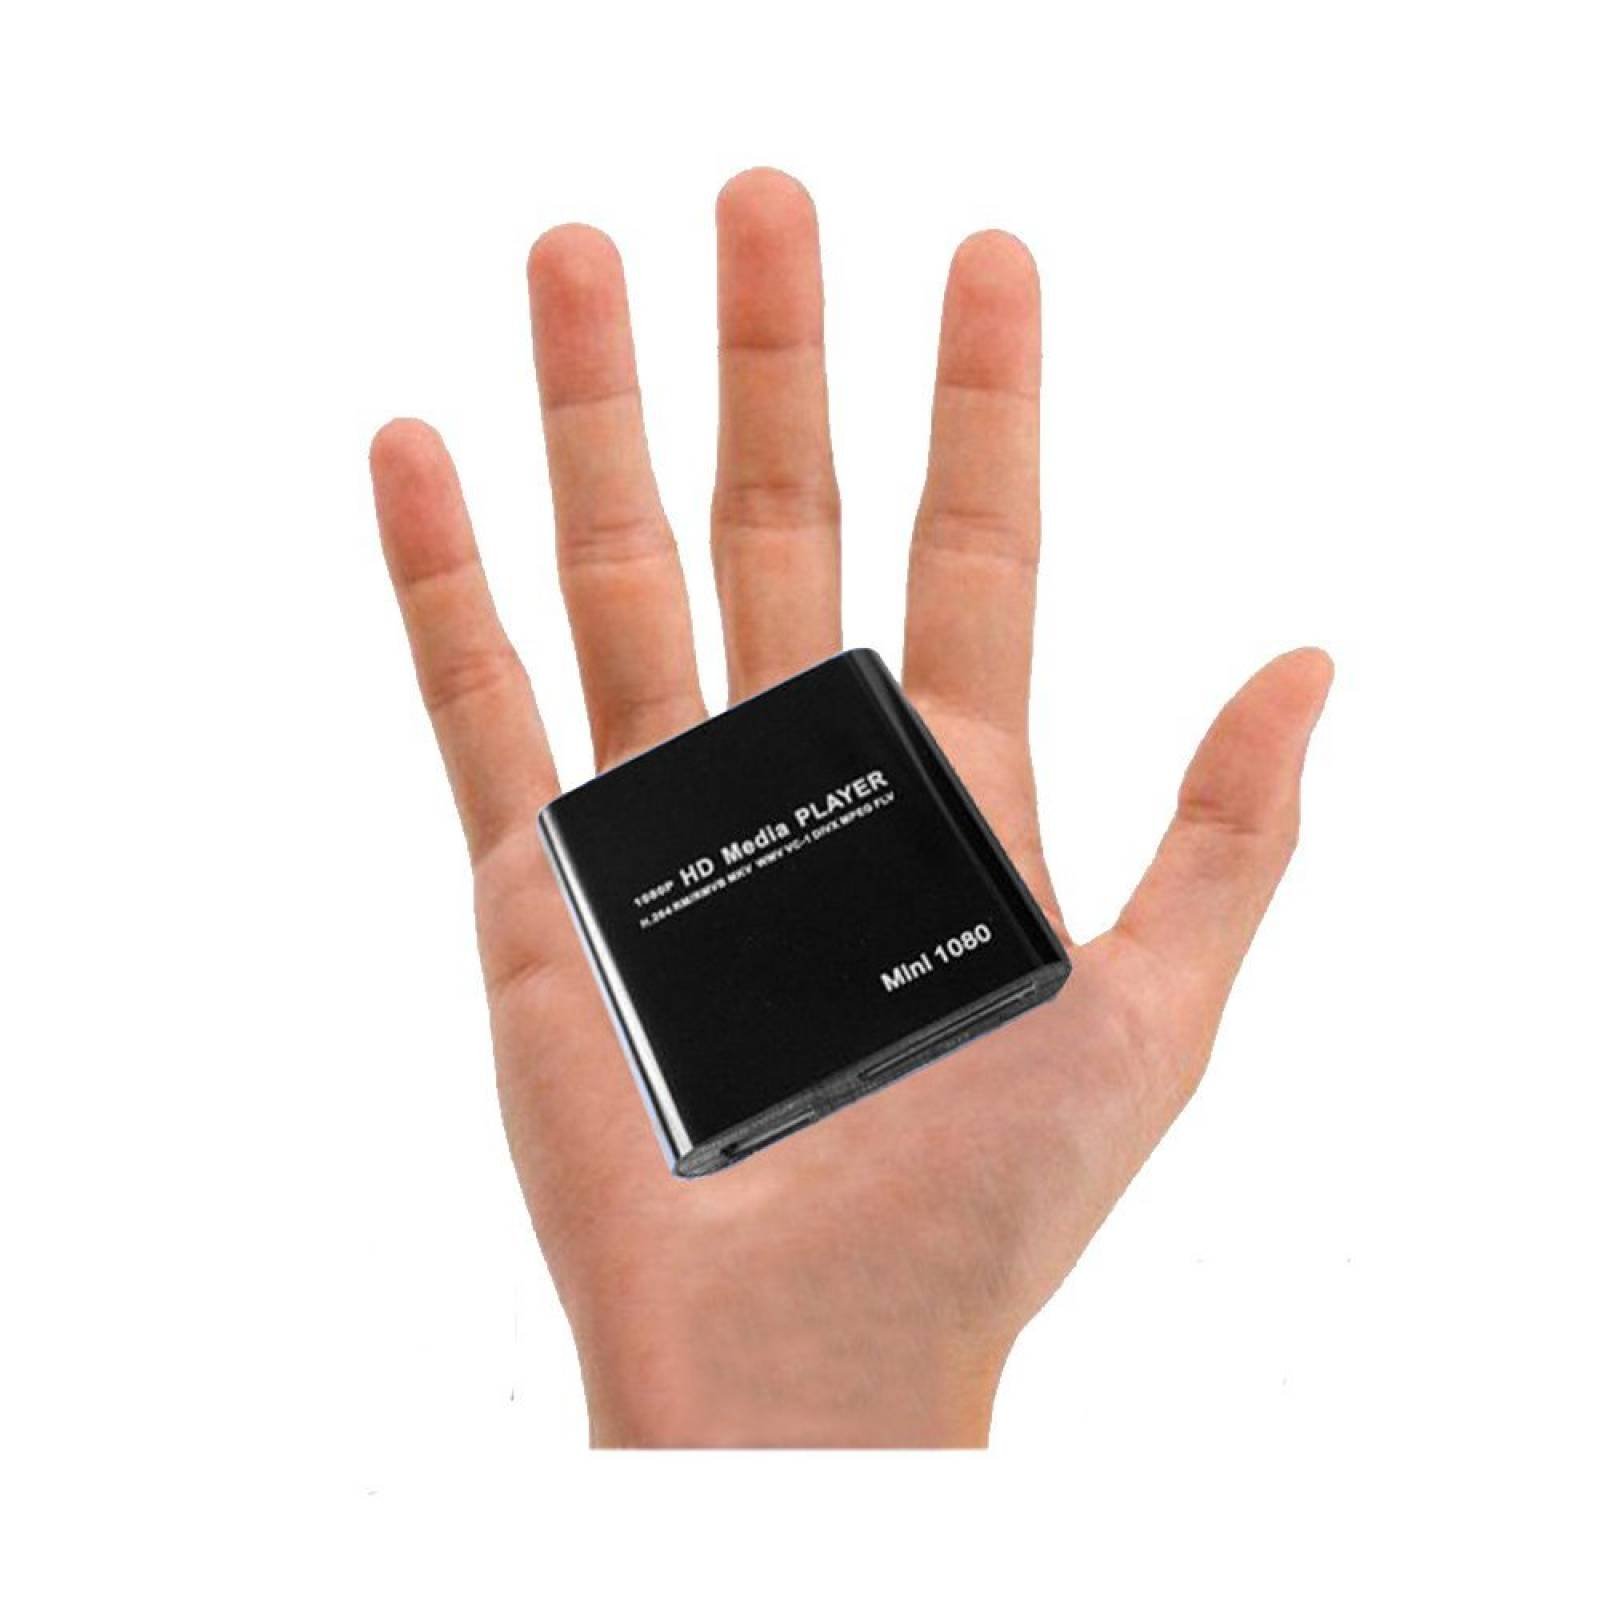 Reproductor multimedia HDMI, negro AGPtek Mini 1080p  -Negro